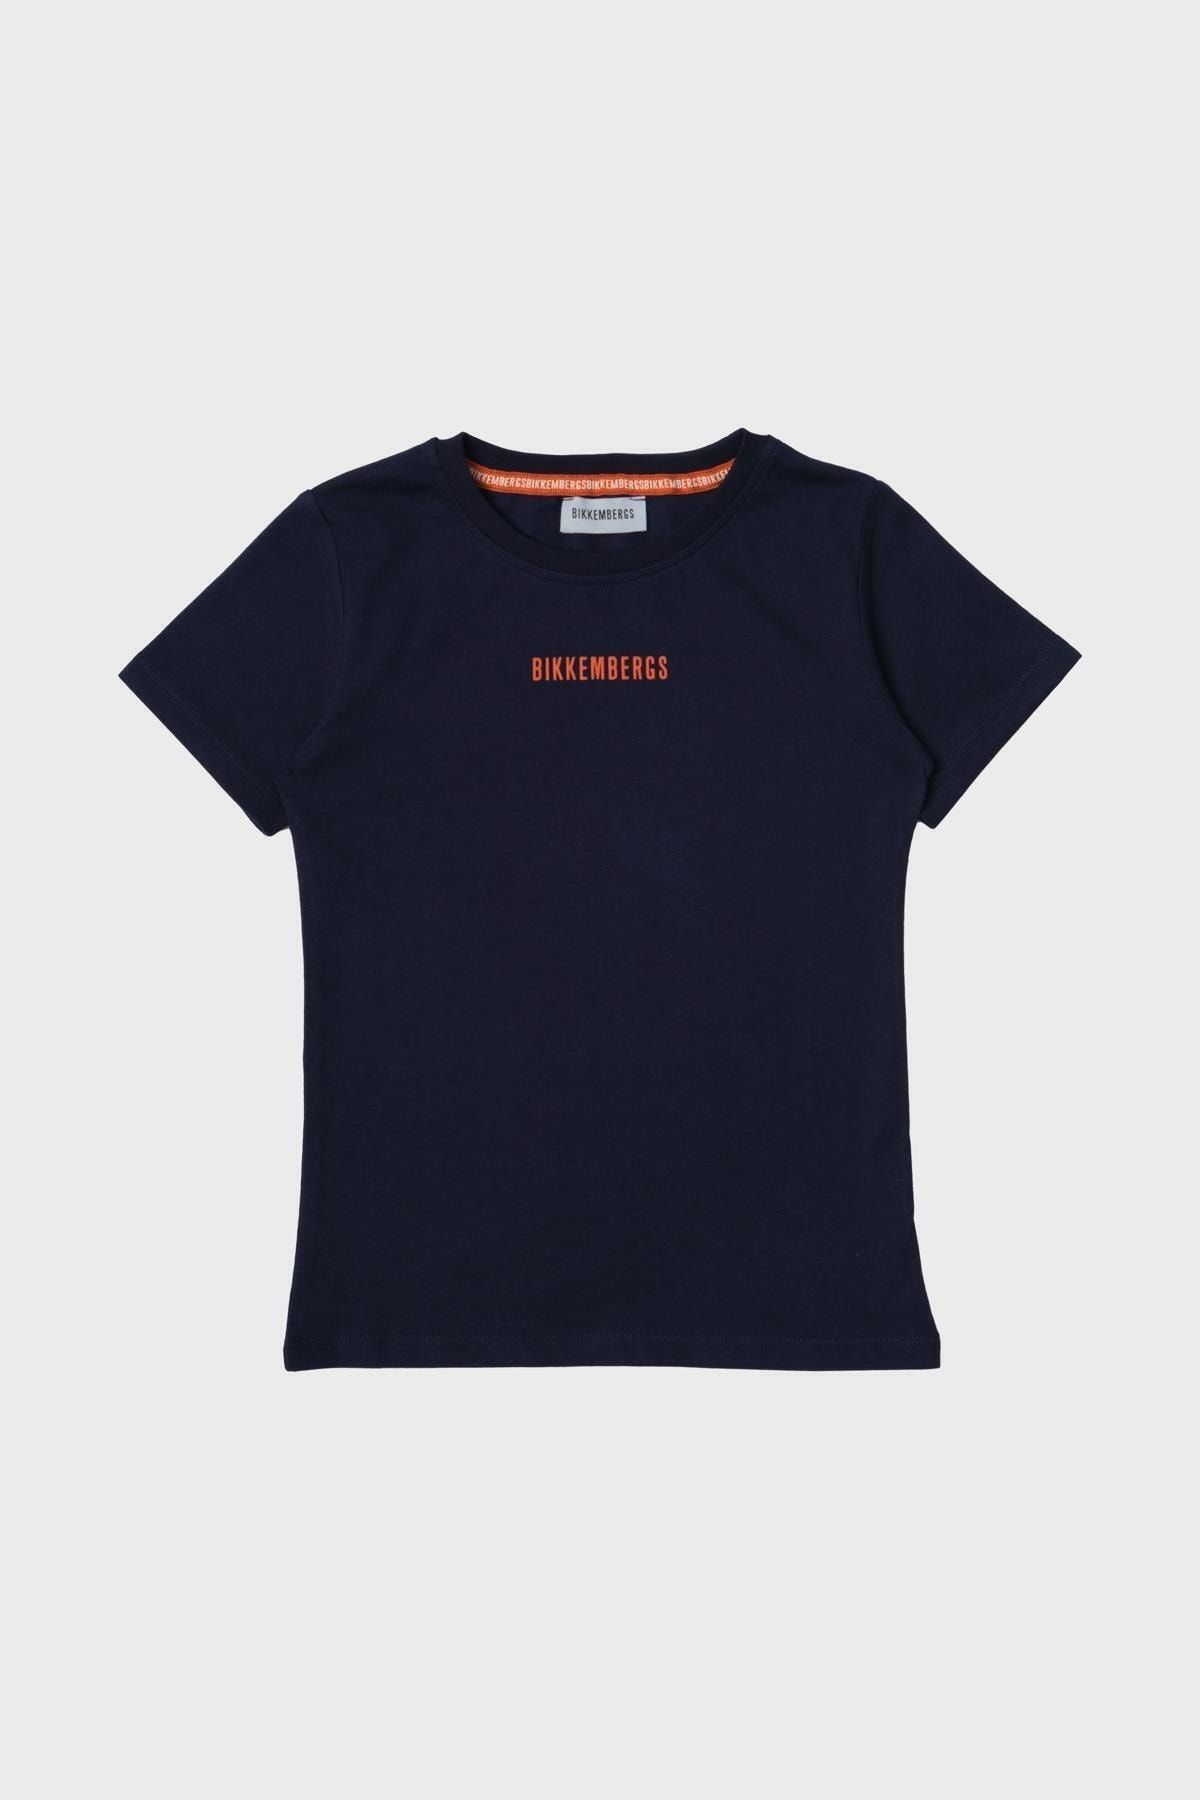 Bikkembergs Erkek Çocuk Lacivert T-Shirt 23SS1BK1505